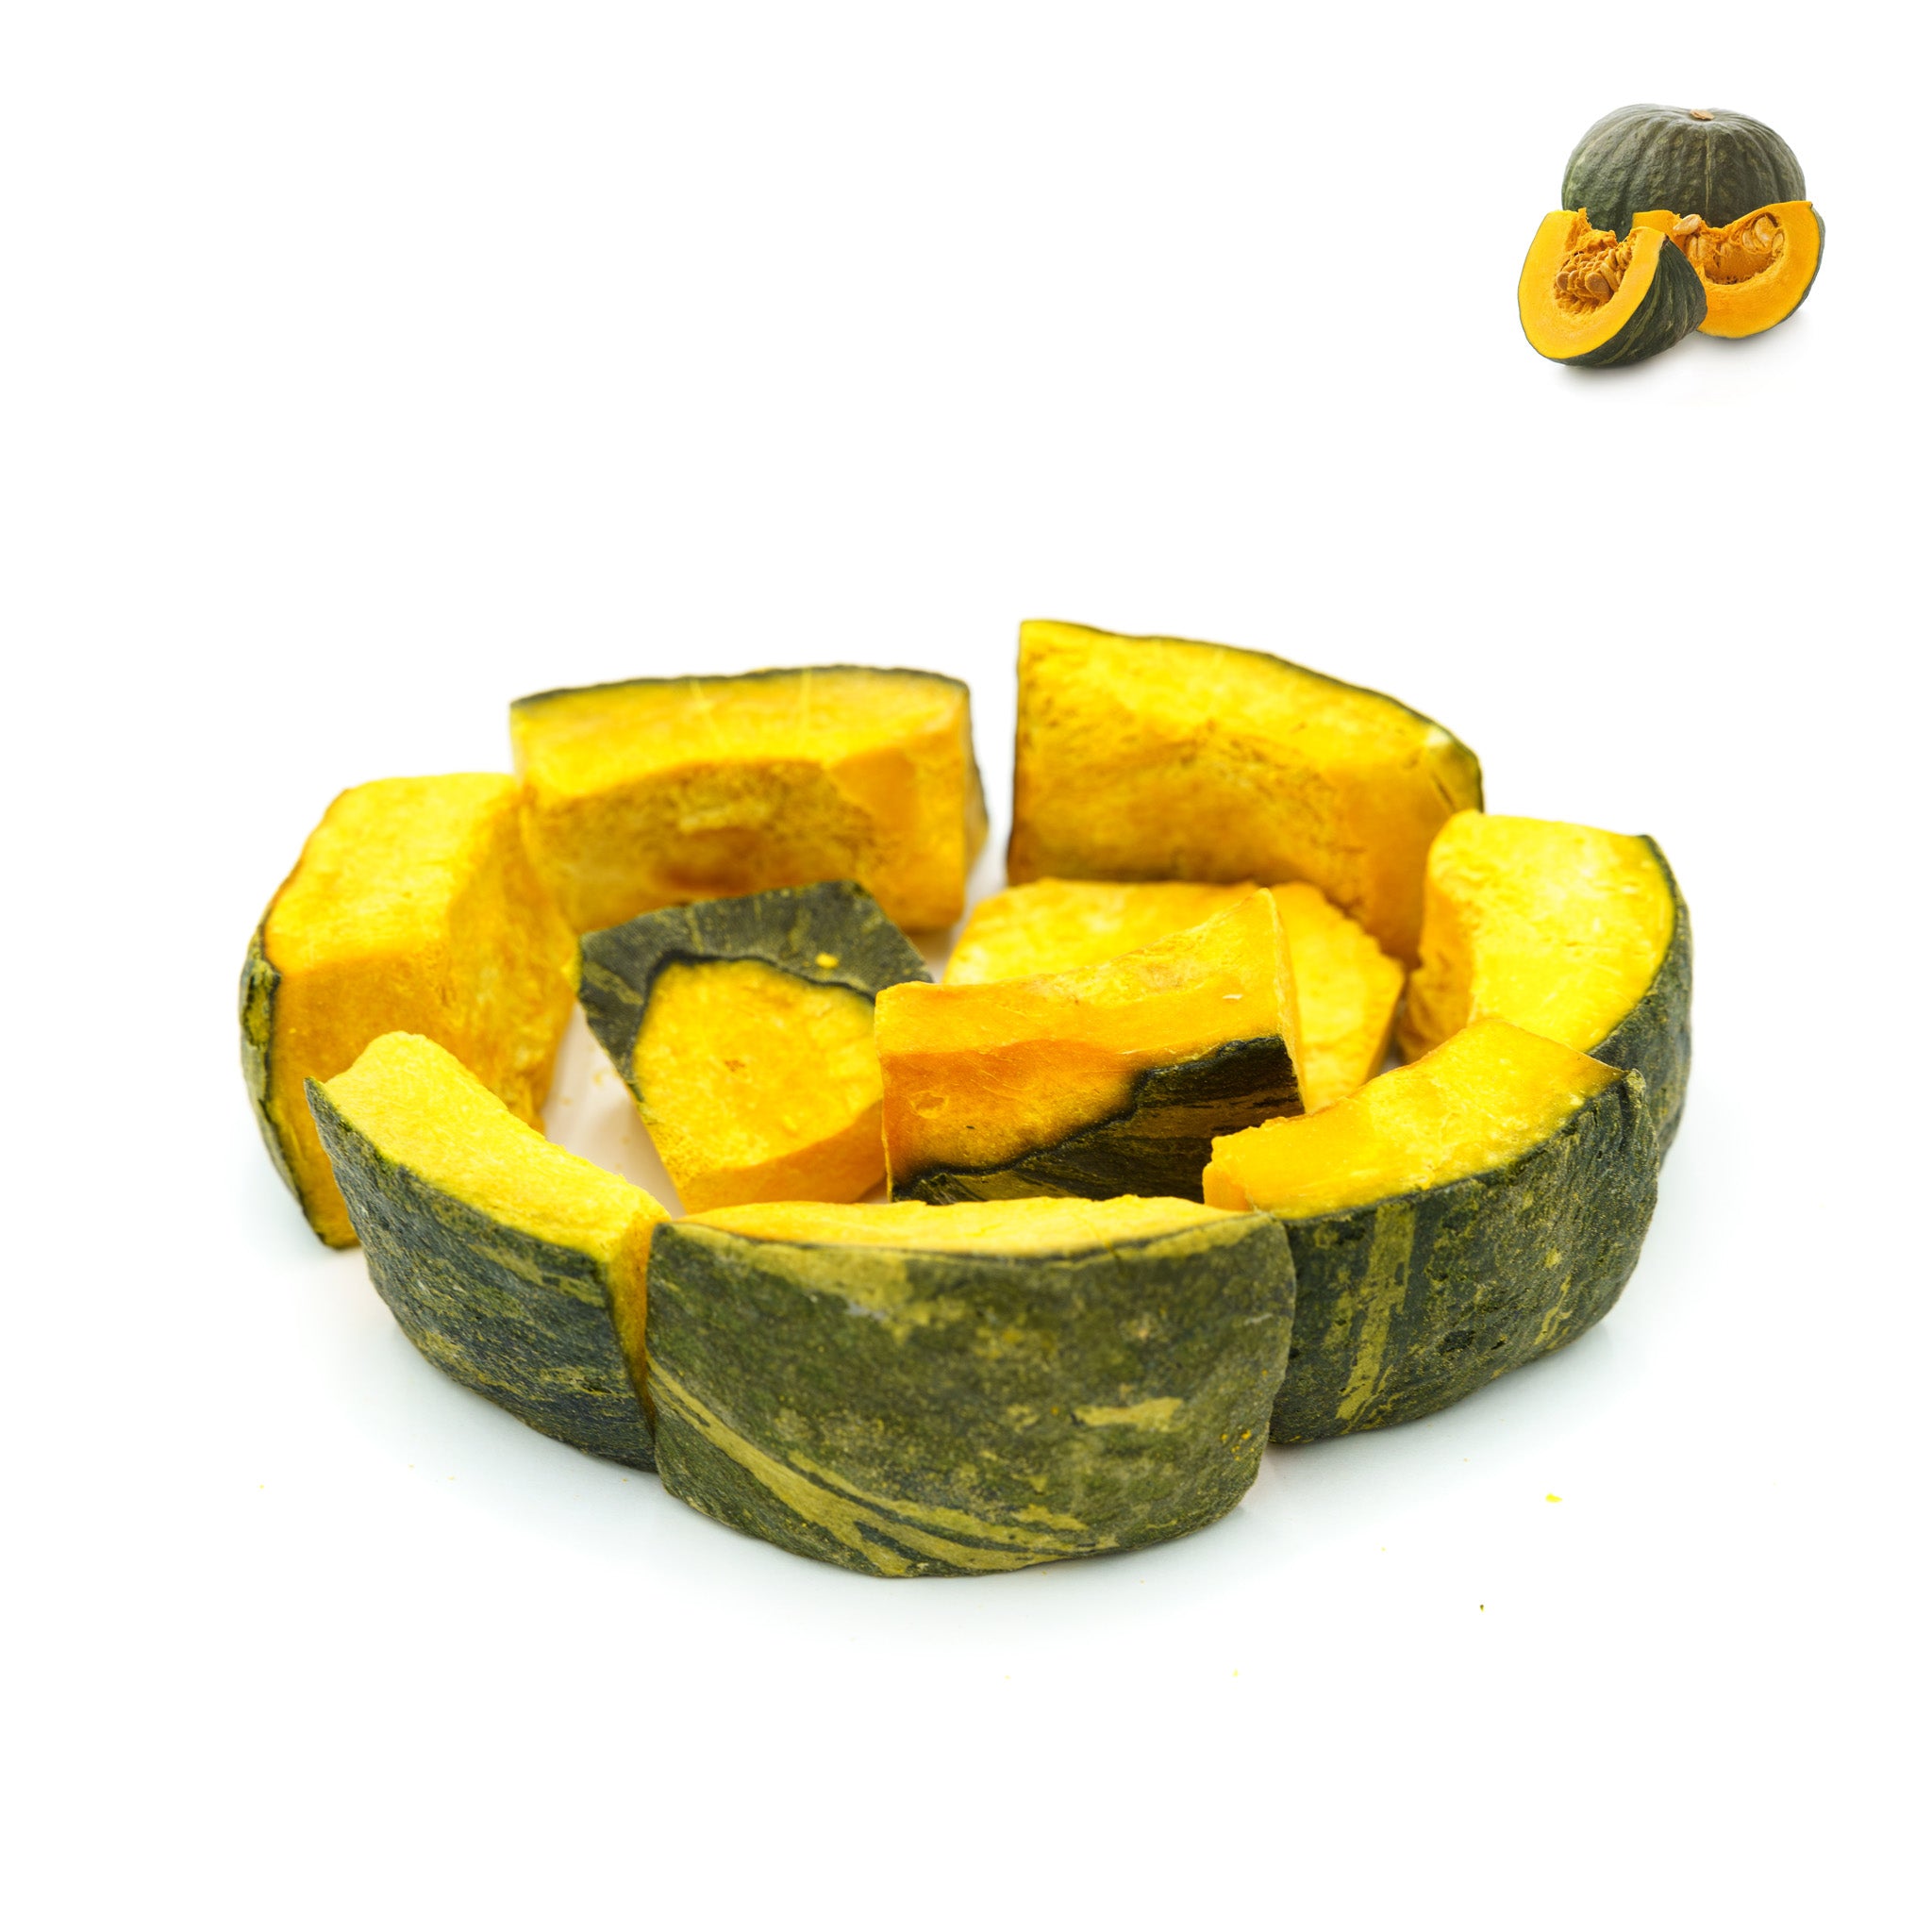 Freeze-dried Pumpkin Chunks - Healthy Snack & Versatile Cooking Ingredient